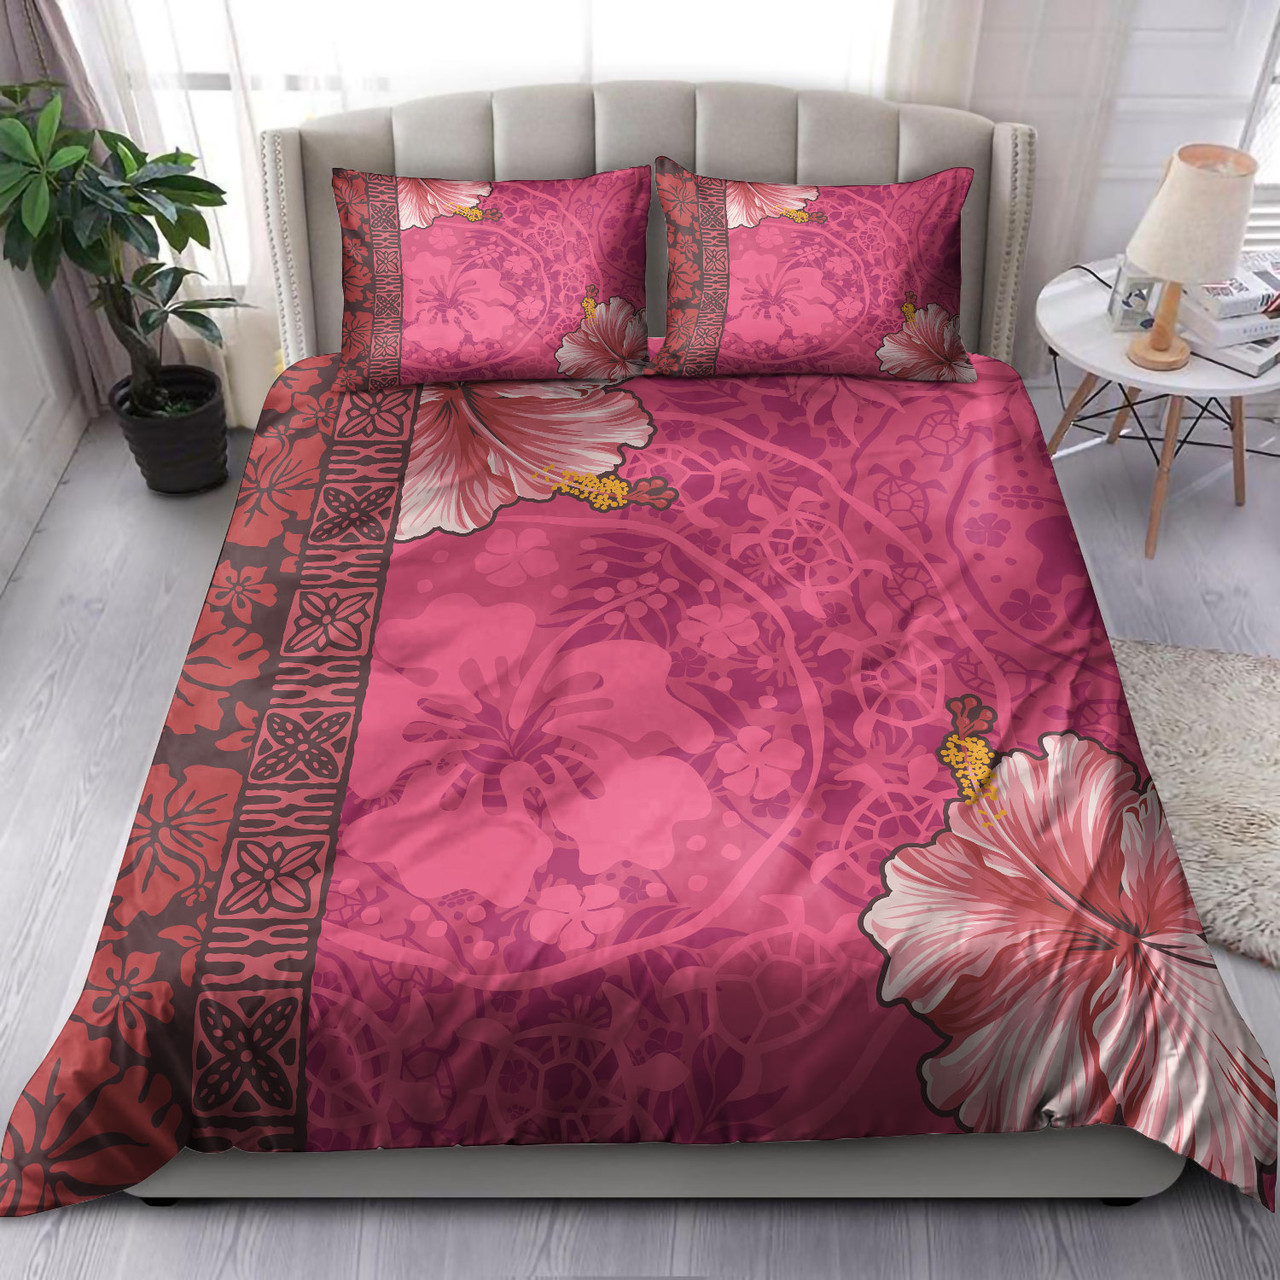 Polynesian Bedding Set - Pinky Hibiscus With Turtles Bedding Set